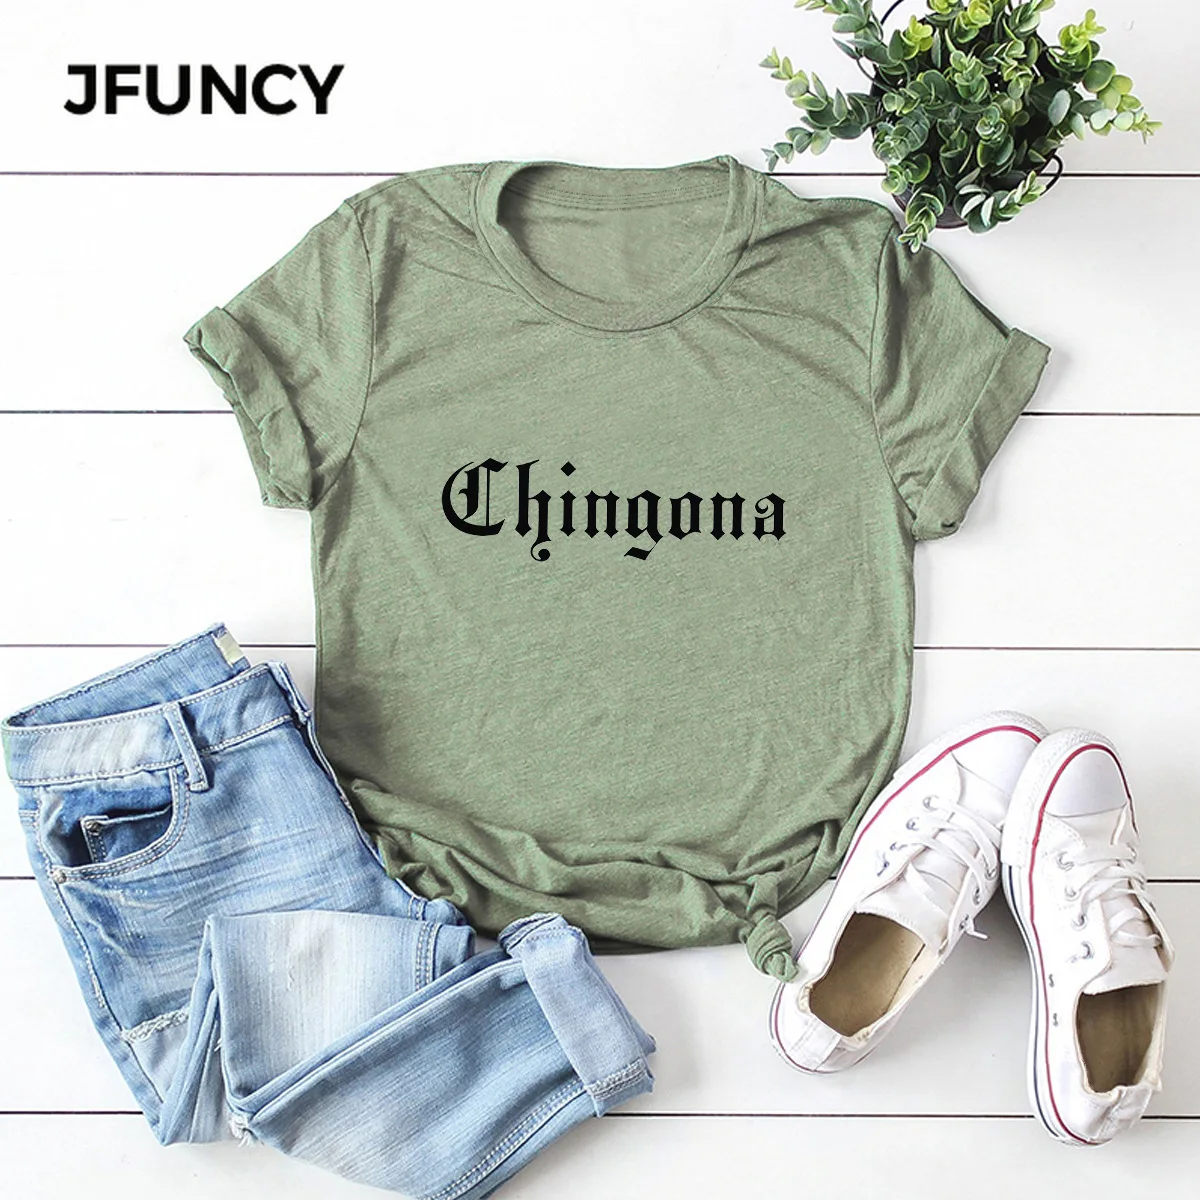 JFUNCY Chingona Letter Print 100%Cotton Summer T Shirt Women Short Sleeve T-shirt Female Tees  Casual Lady Basic Tops